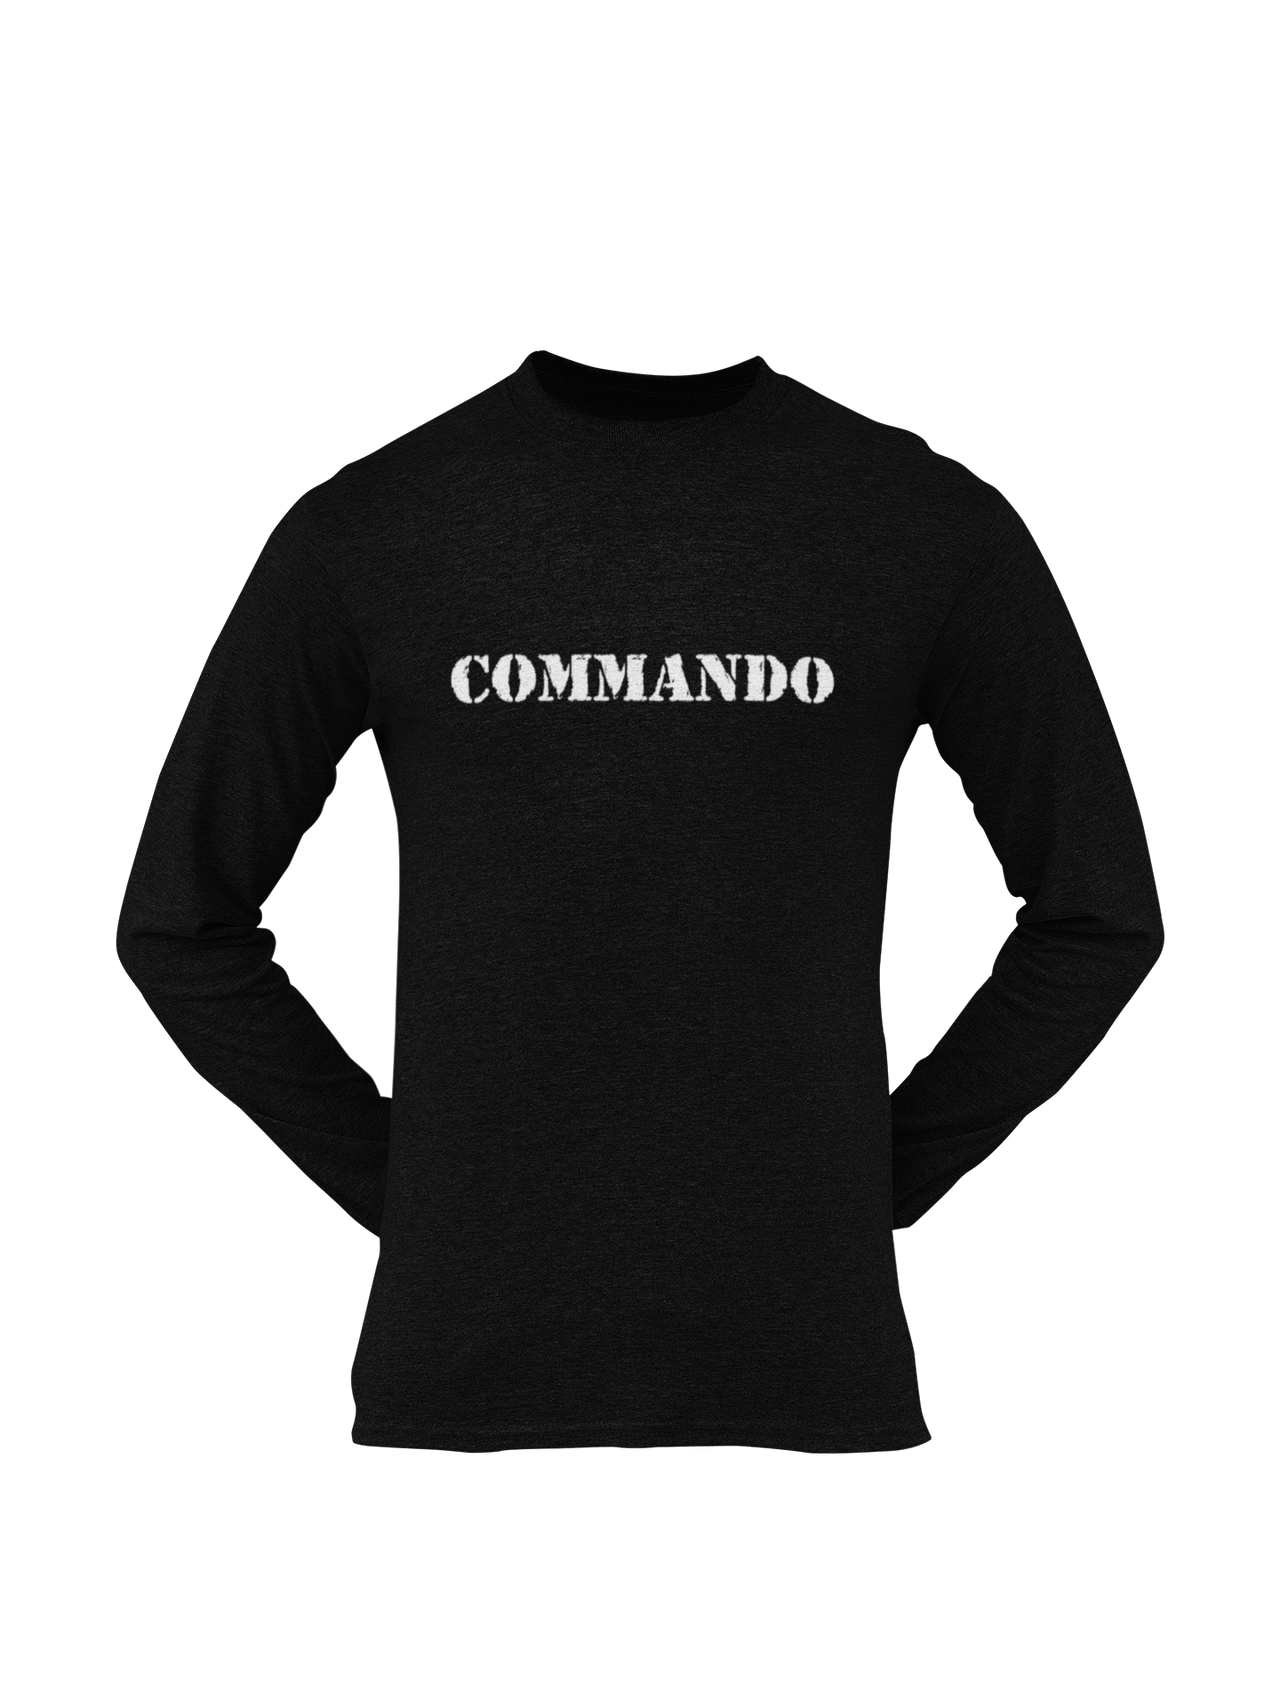 Commando T-shirt - Commando (Men)